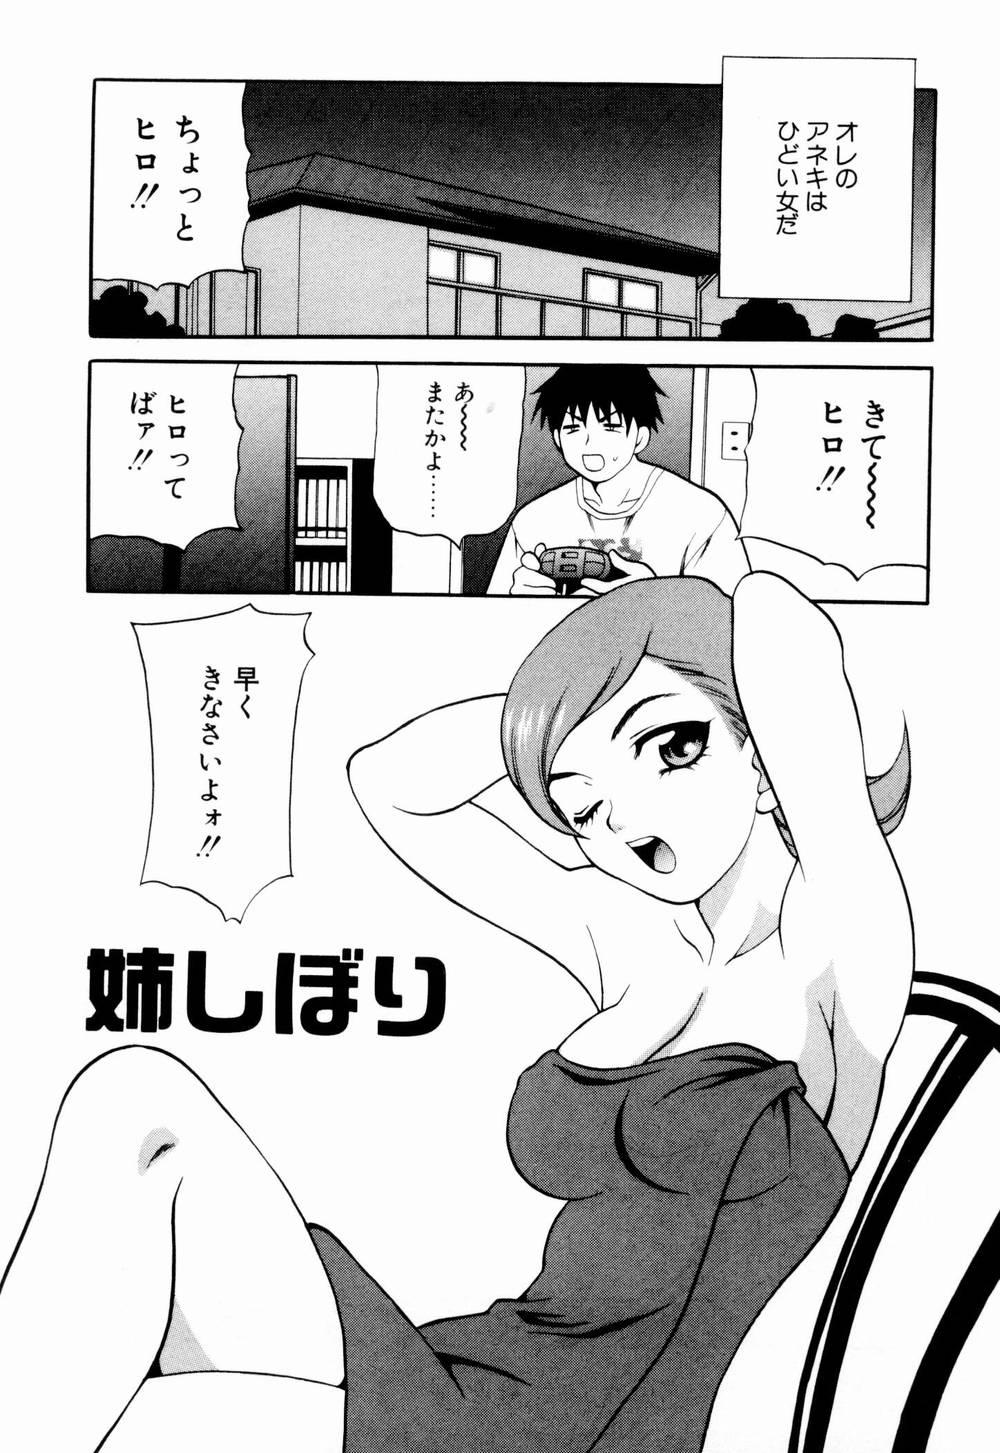 Teentube Kinyoubi no Ningyohime - Friday Mermaid Princess Spooning - Page 9